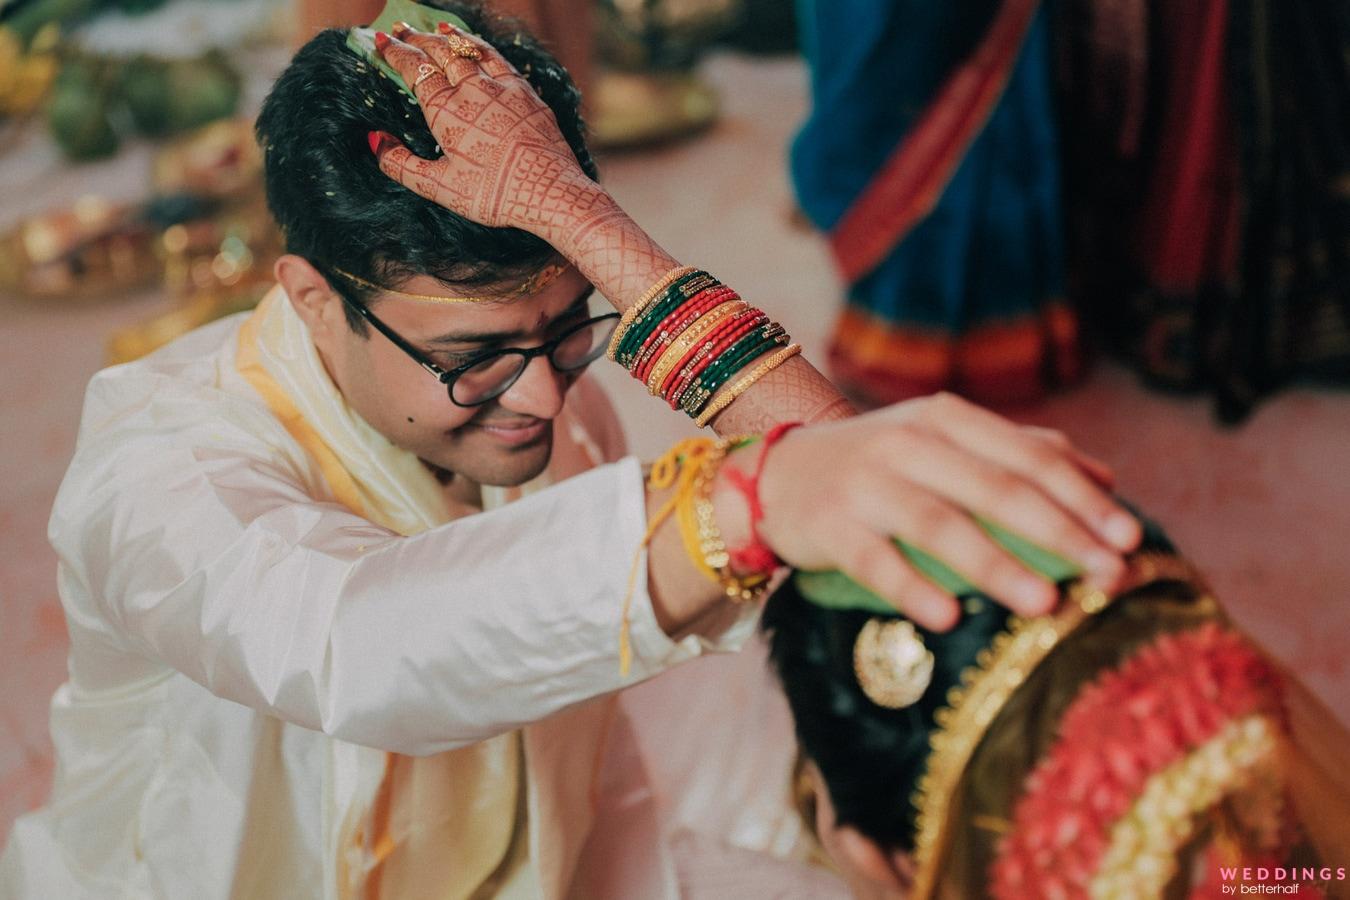 Reception - Ankita & Rohit's Wedding #RAbNeBanaDiJodi - YouTube